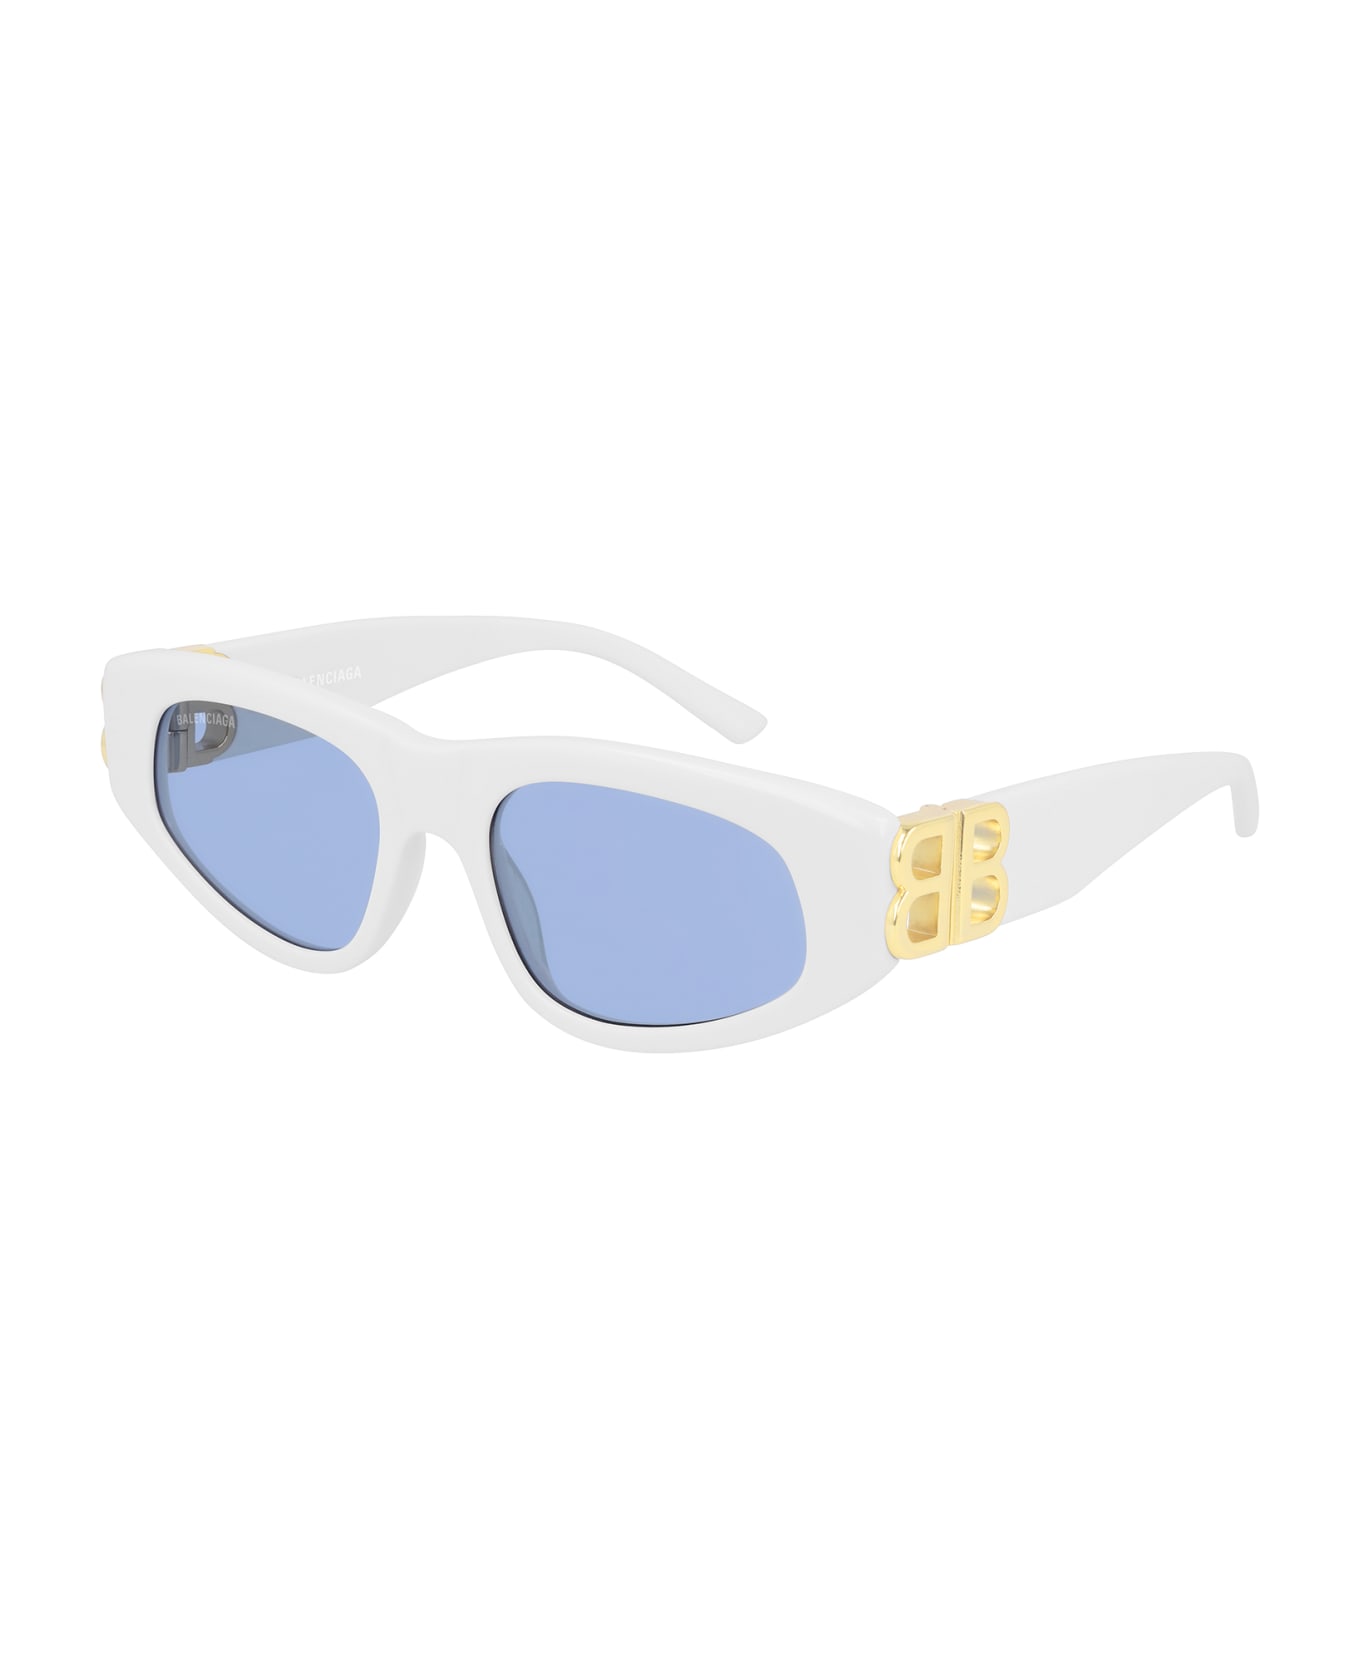 Balenciaga Eyewear BB0095S Sunglasses - White Gold Light Blue